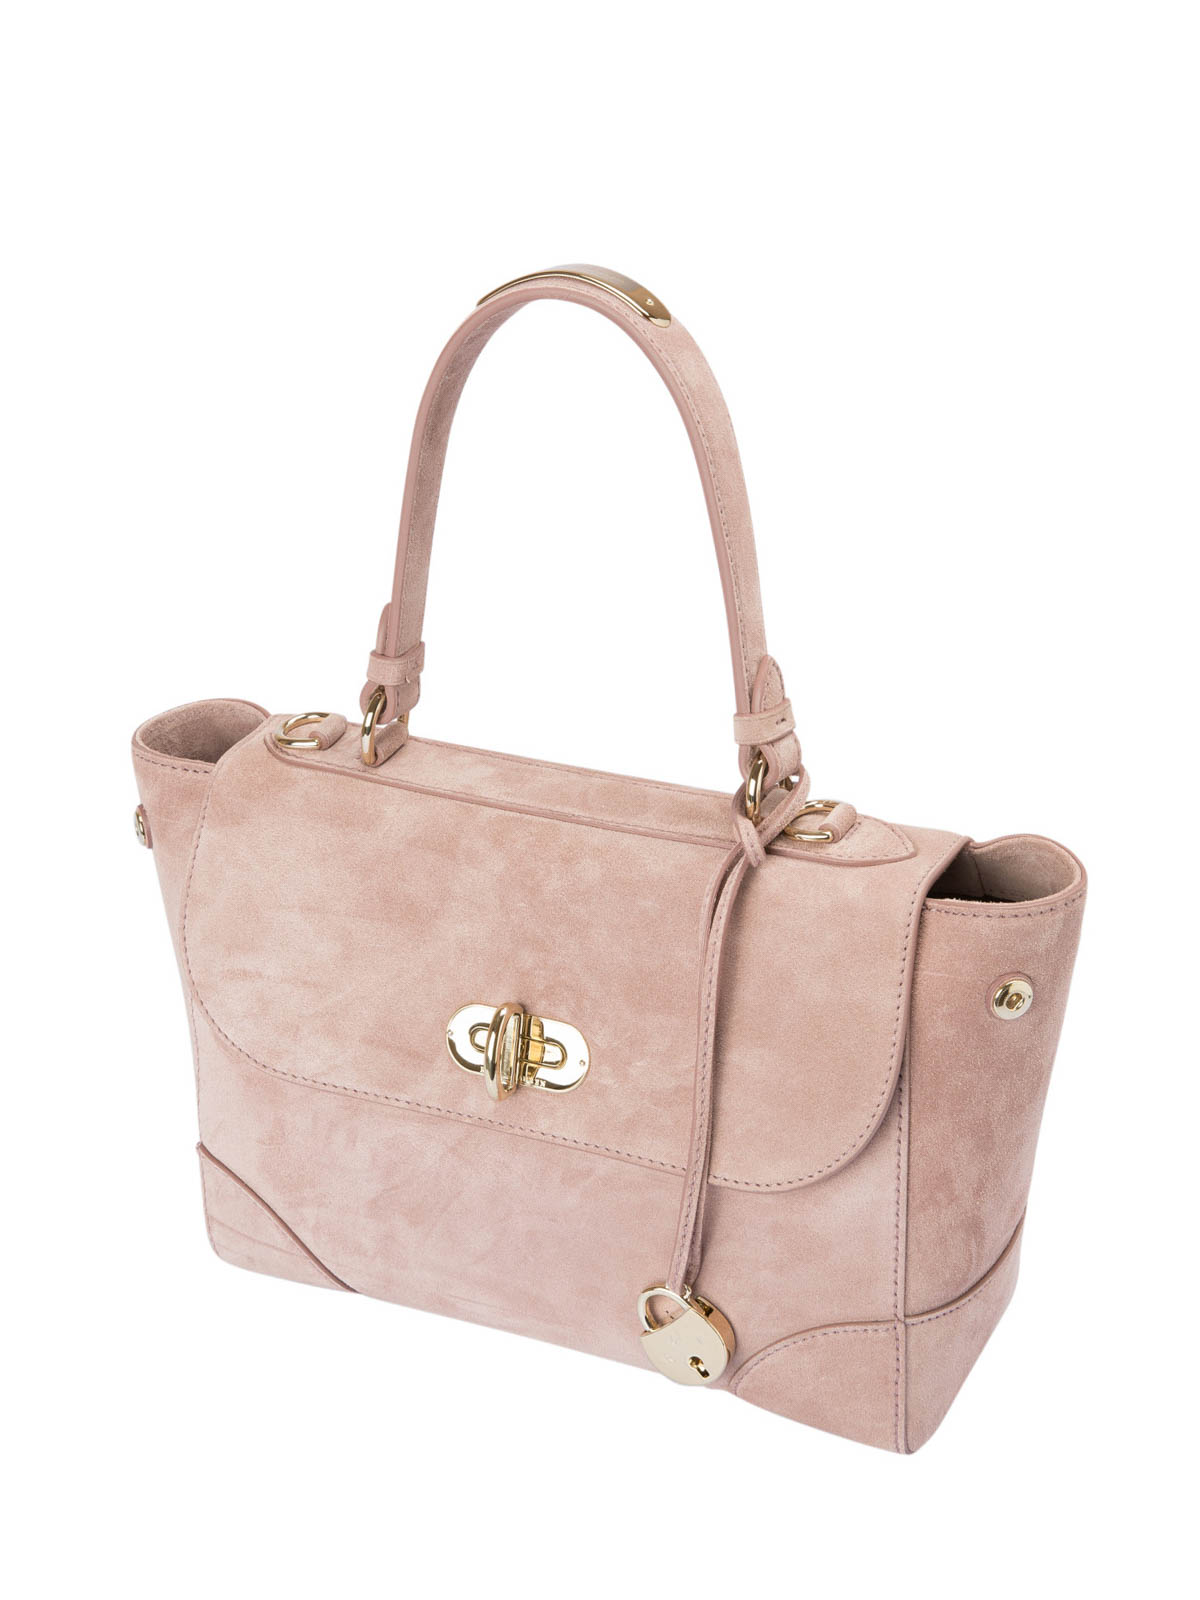 Pink Lady Bowling Bag